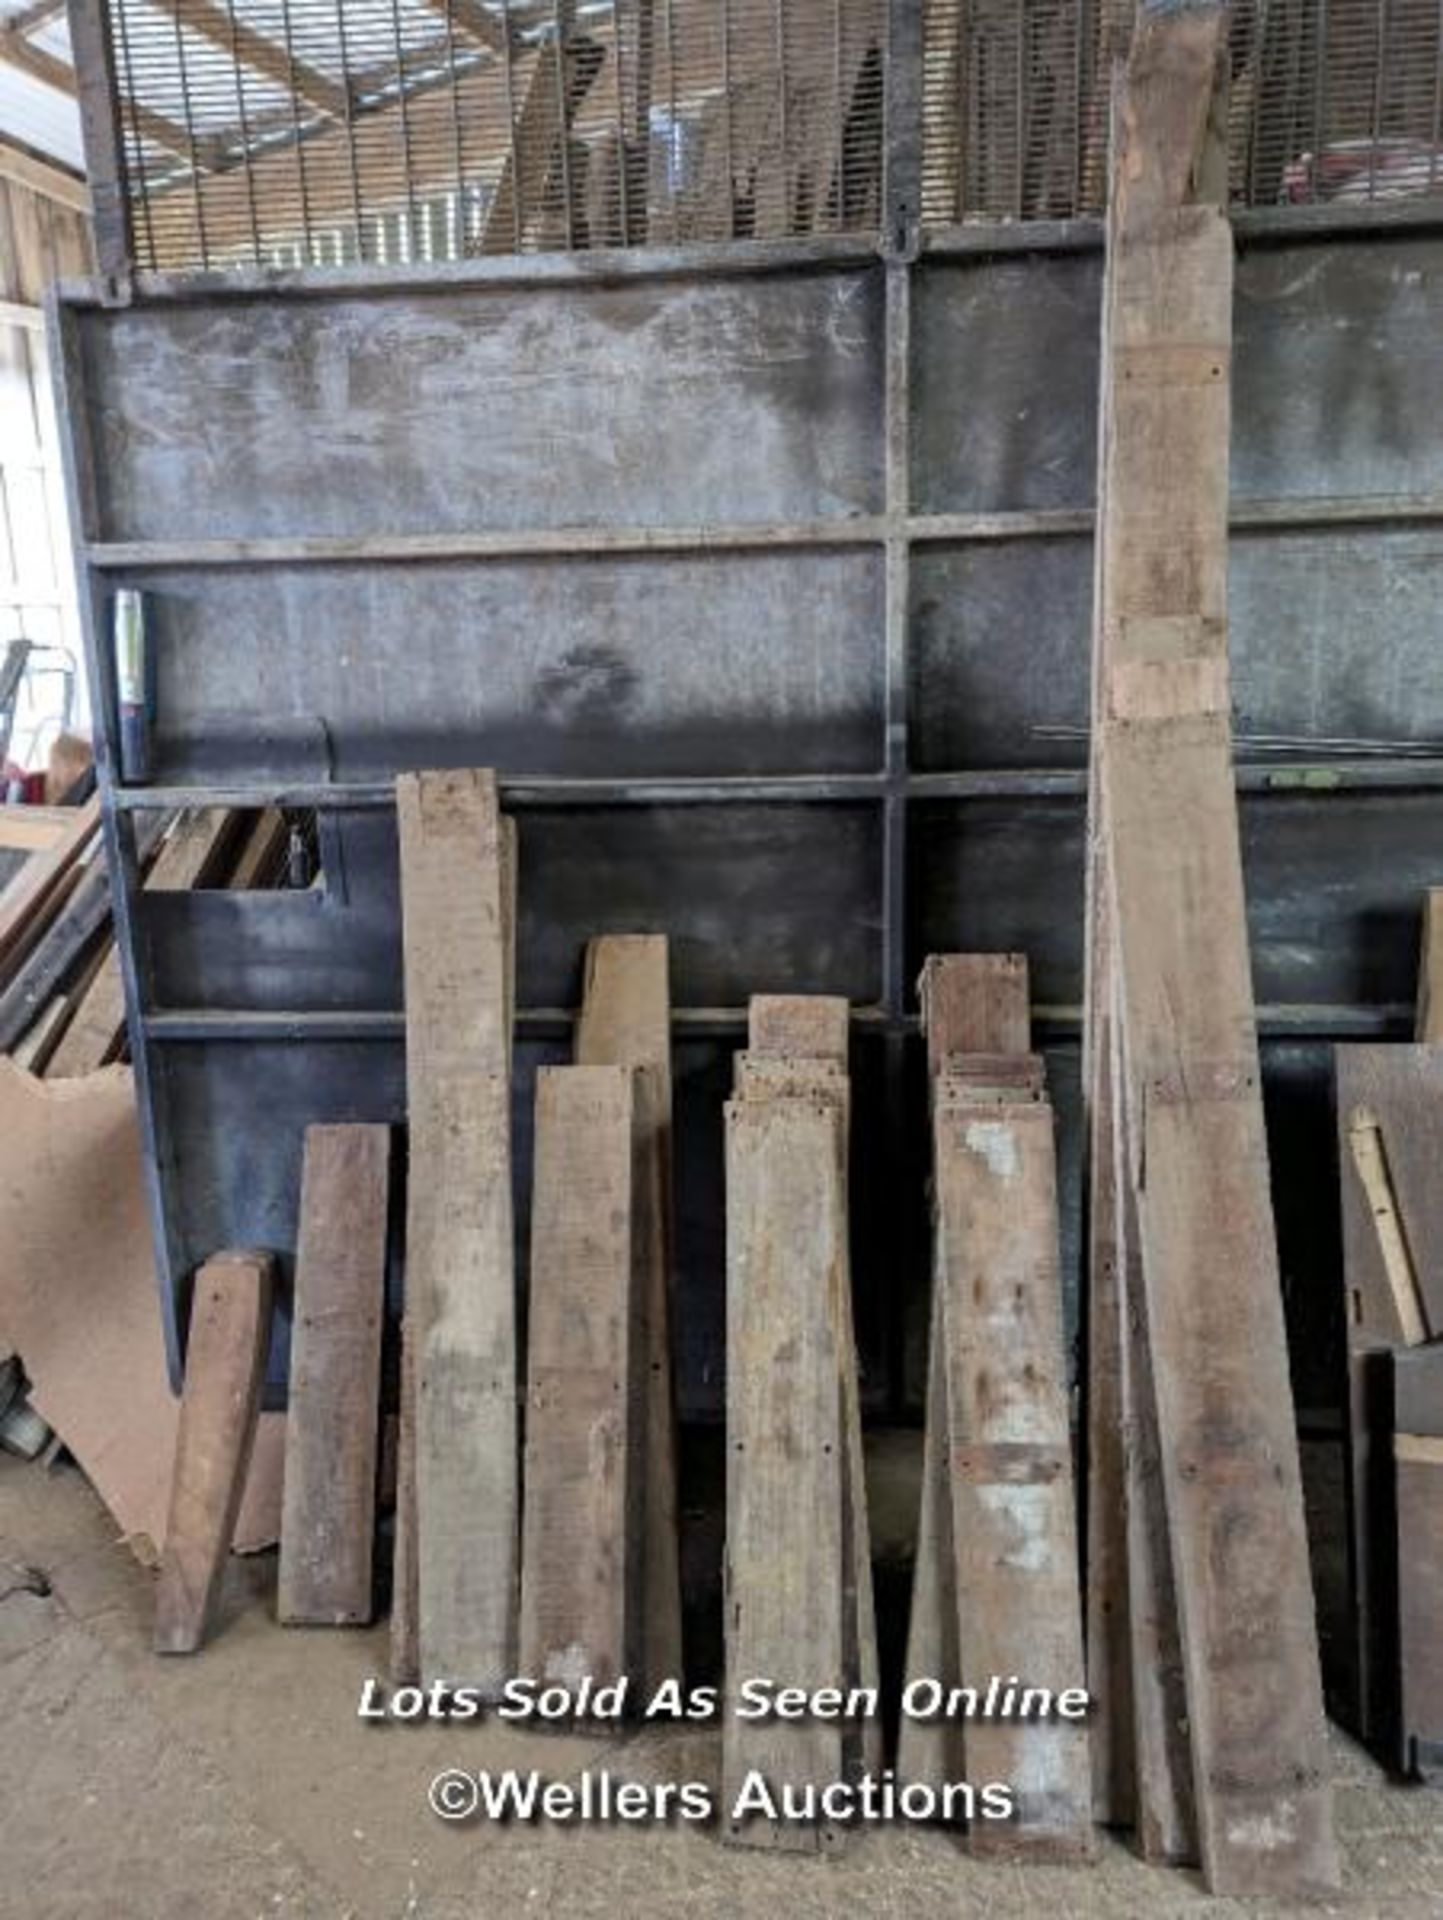 Parcel of hardwood, possibly teak/mahogany 30 pieces from 14cm x 3.5cm x 90cm to 14.5cm x 3.5cm x